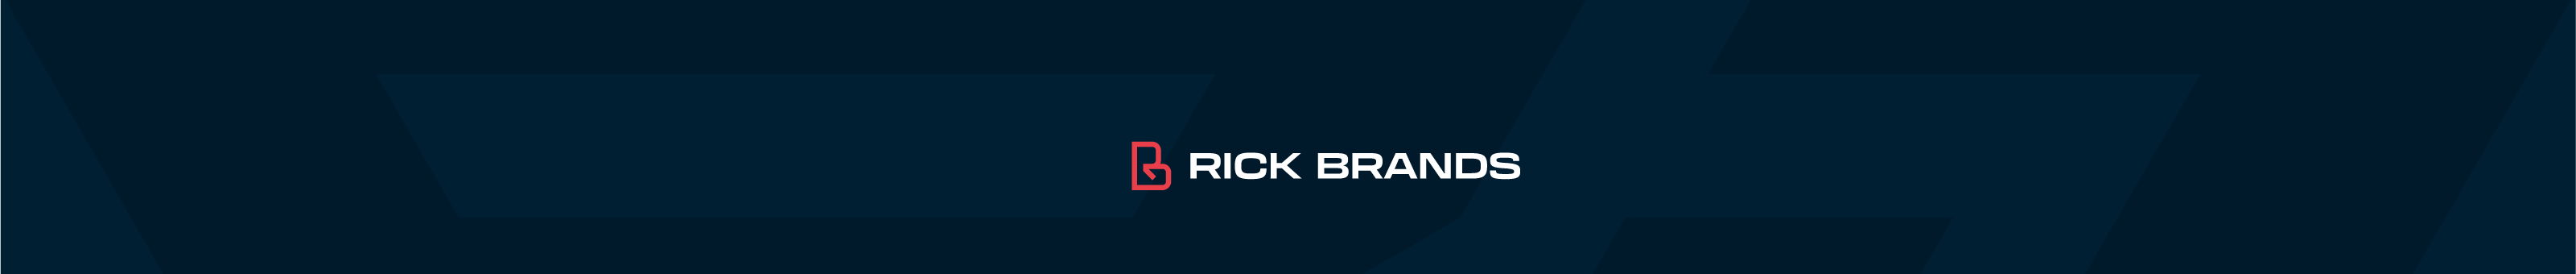 Rick Brands's profile banner